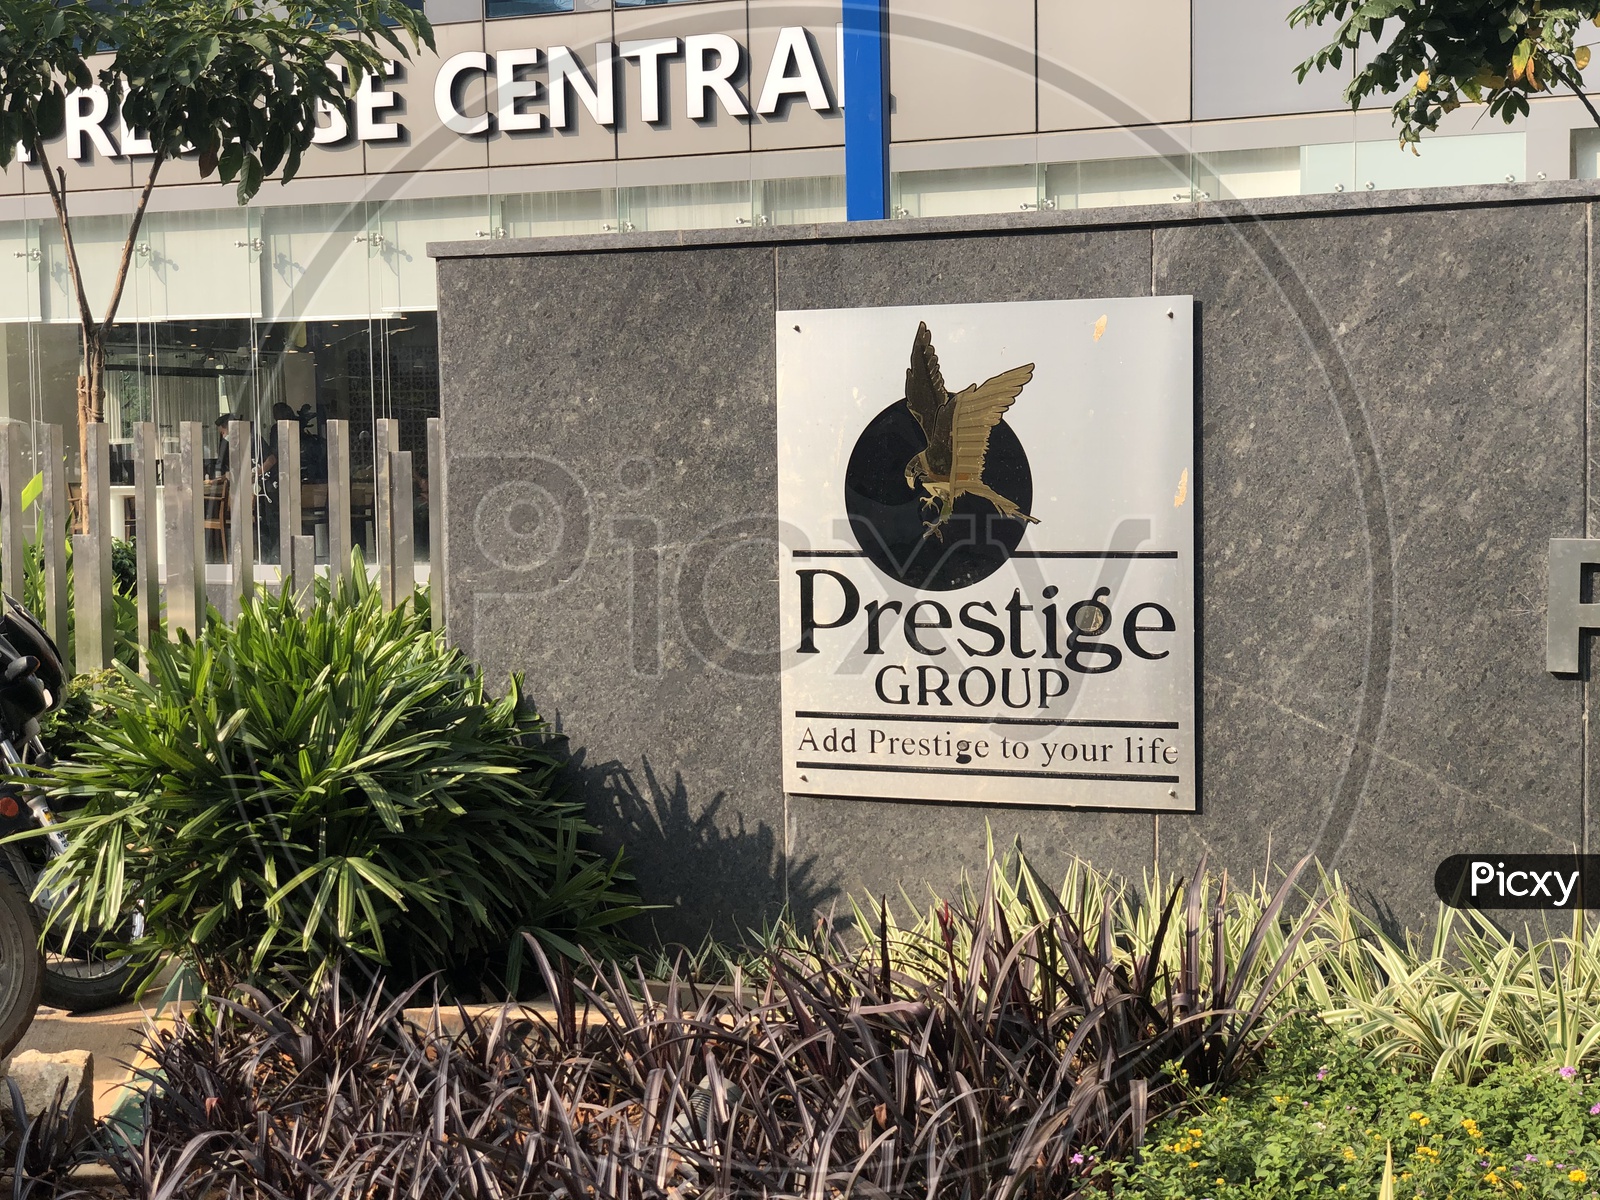 Prestige group sign board